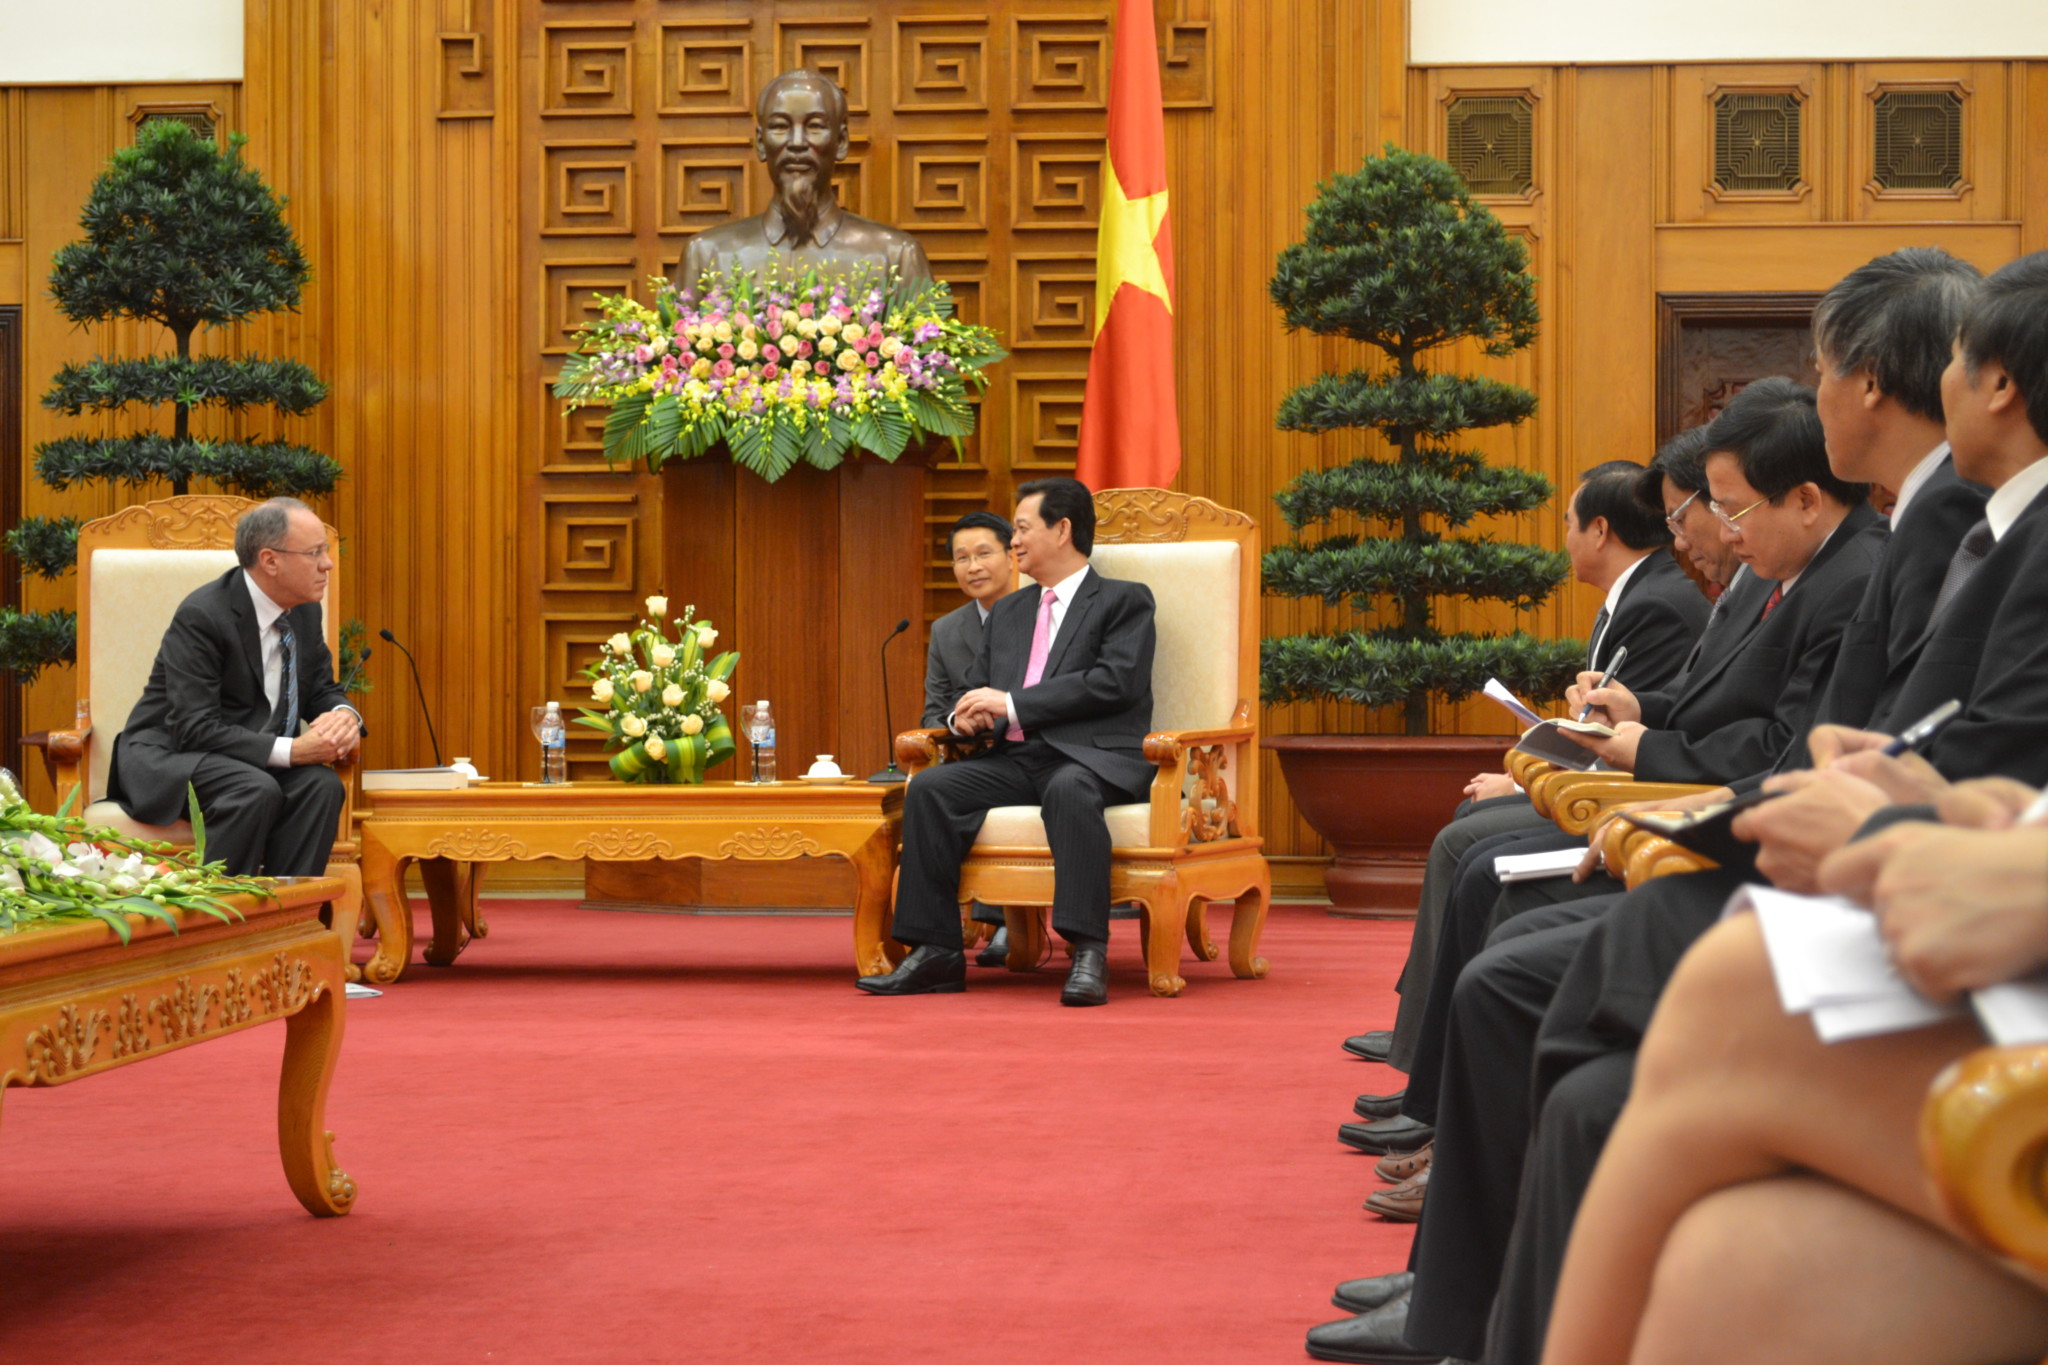 Economics Nobel Laureate Prof. Roger B. Myerson with Prime Minister Nguyen Tan Dung